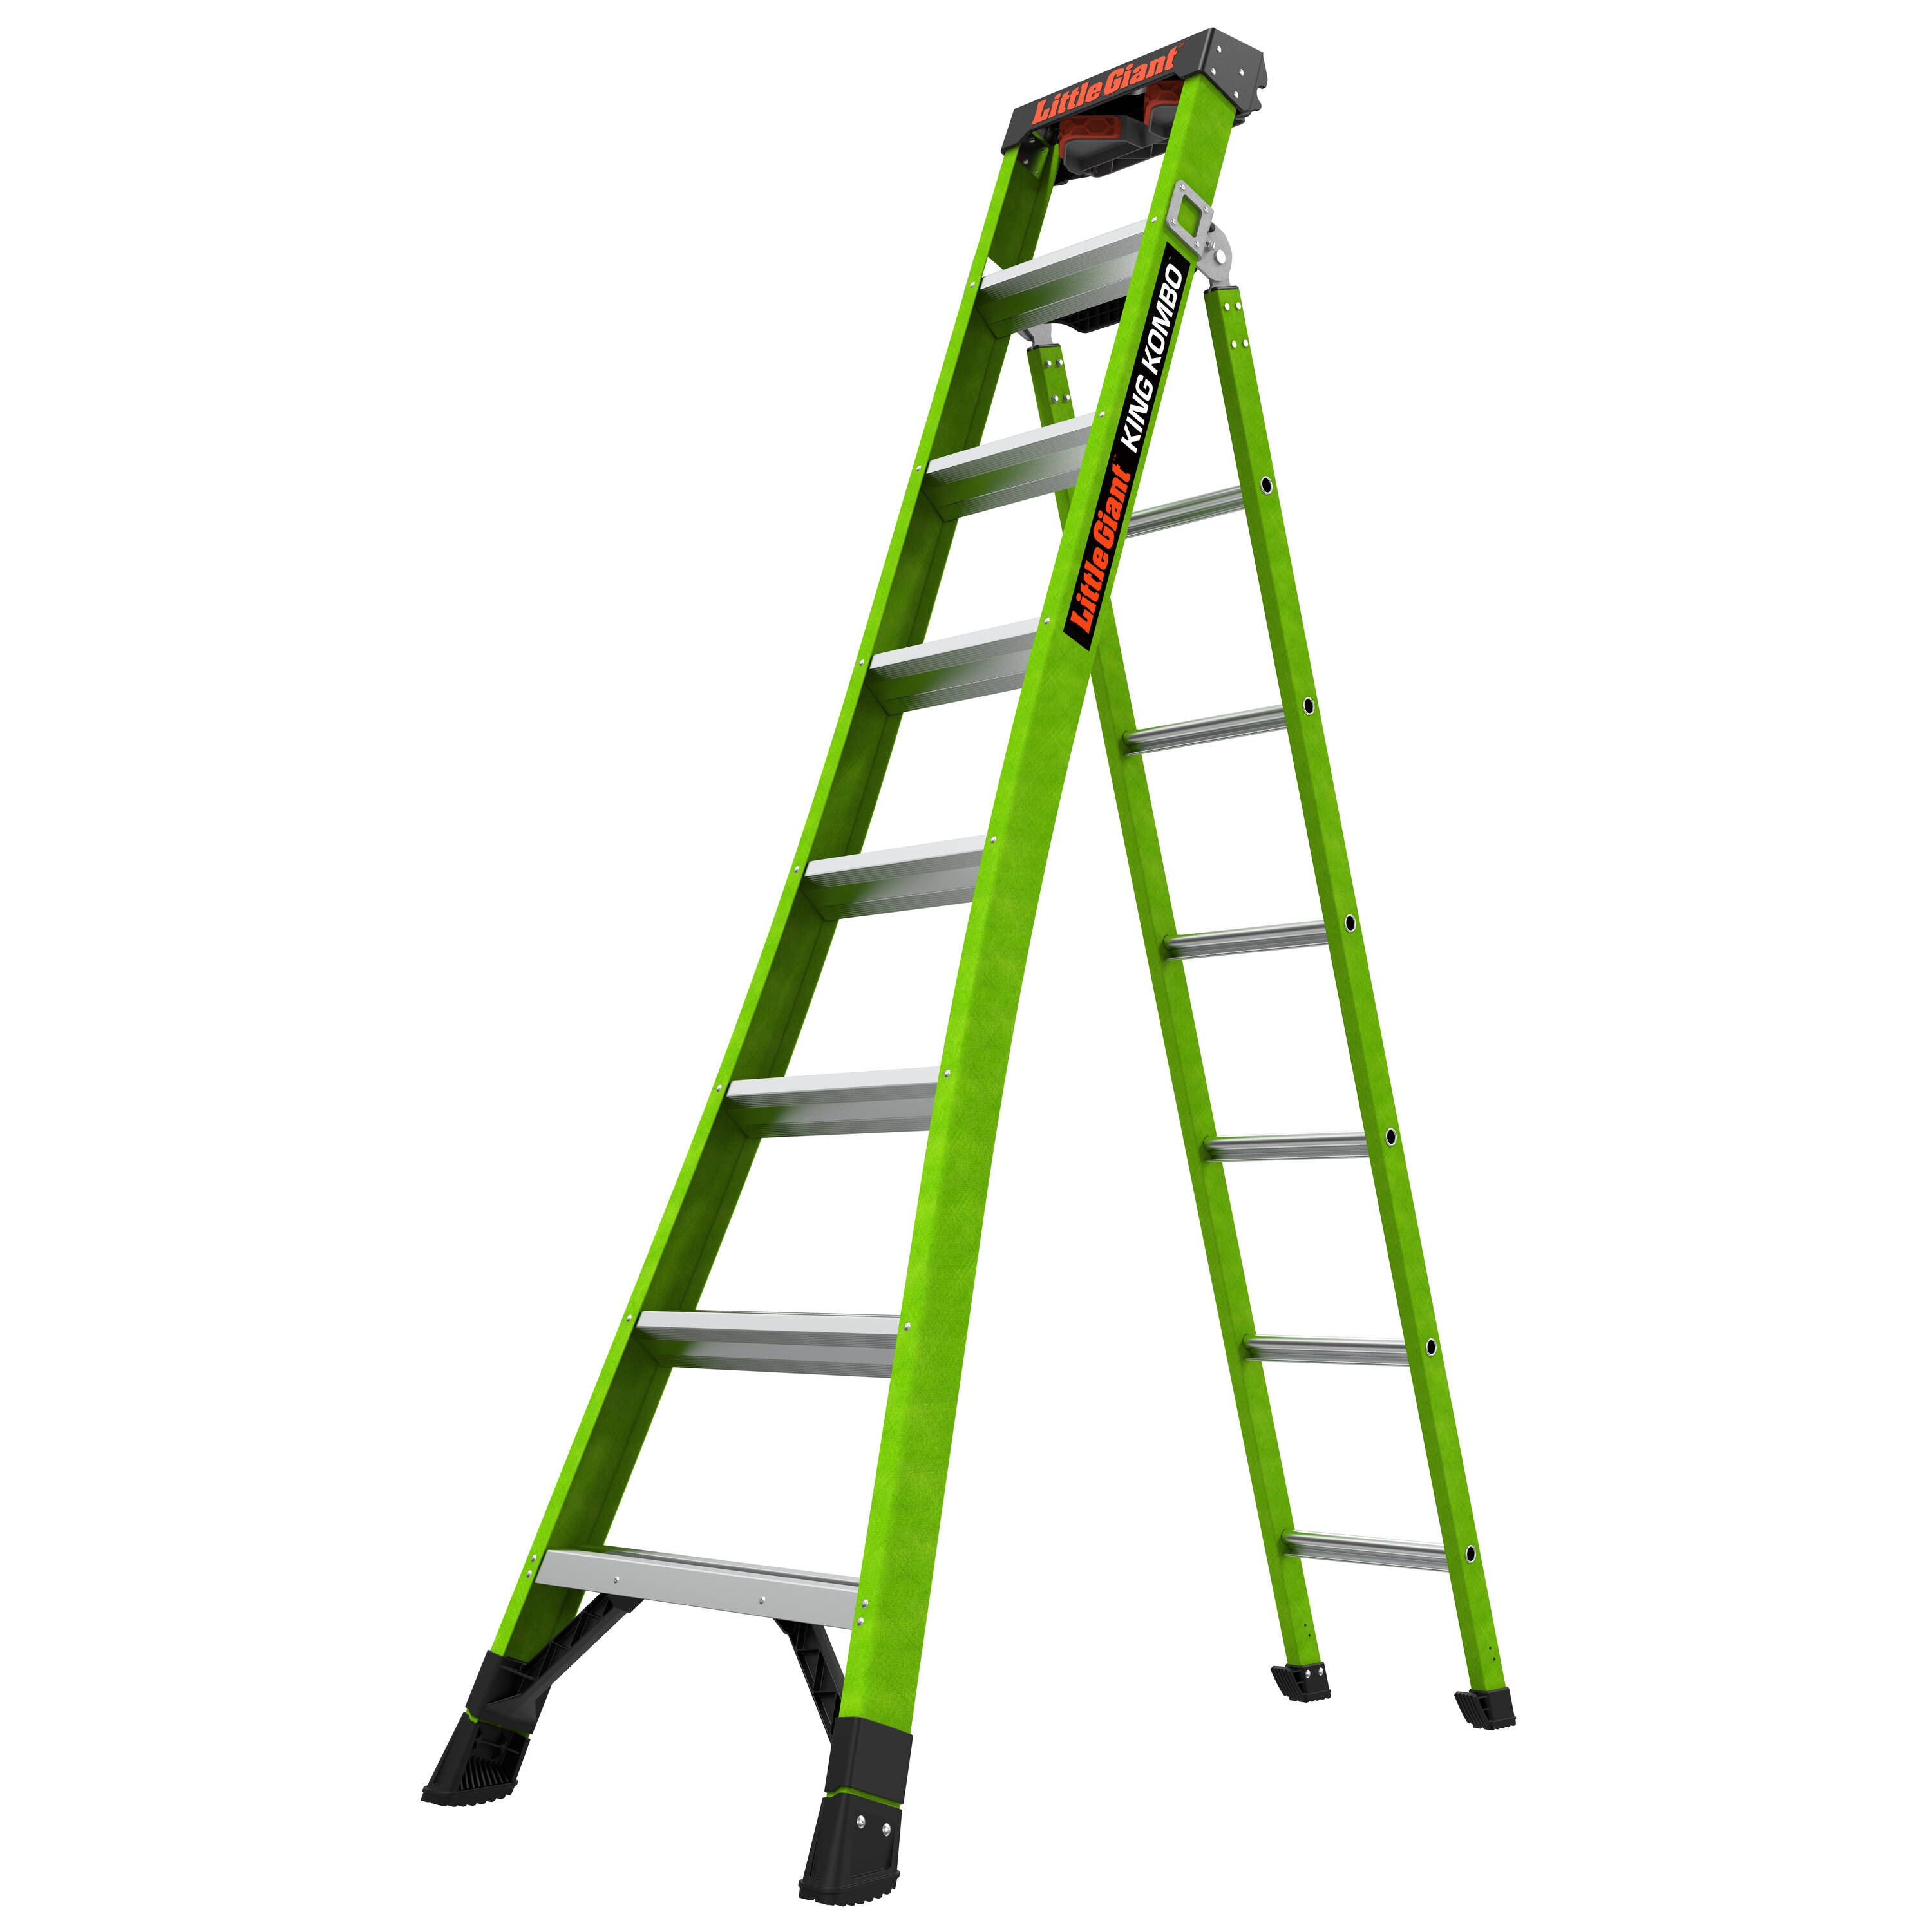 King Kombo 2 Pro M8 8-ft Fiberglass Type 1aa- 375-lb Load Capacity Step Ladder in Green | - Little Giant Ladders 13908-002